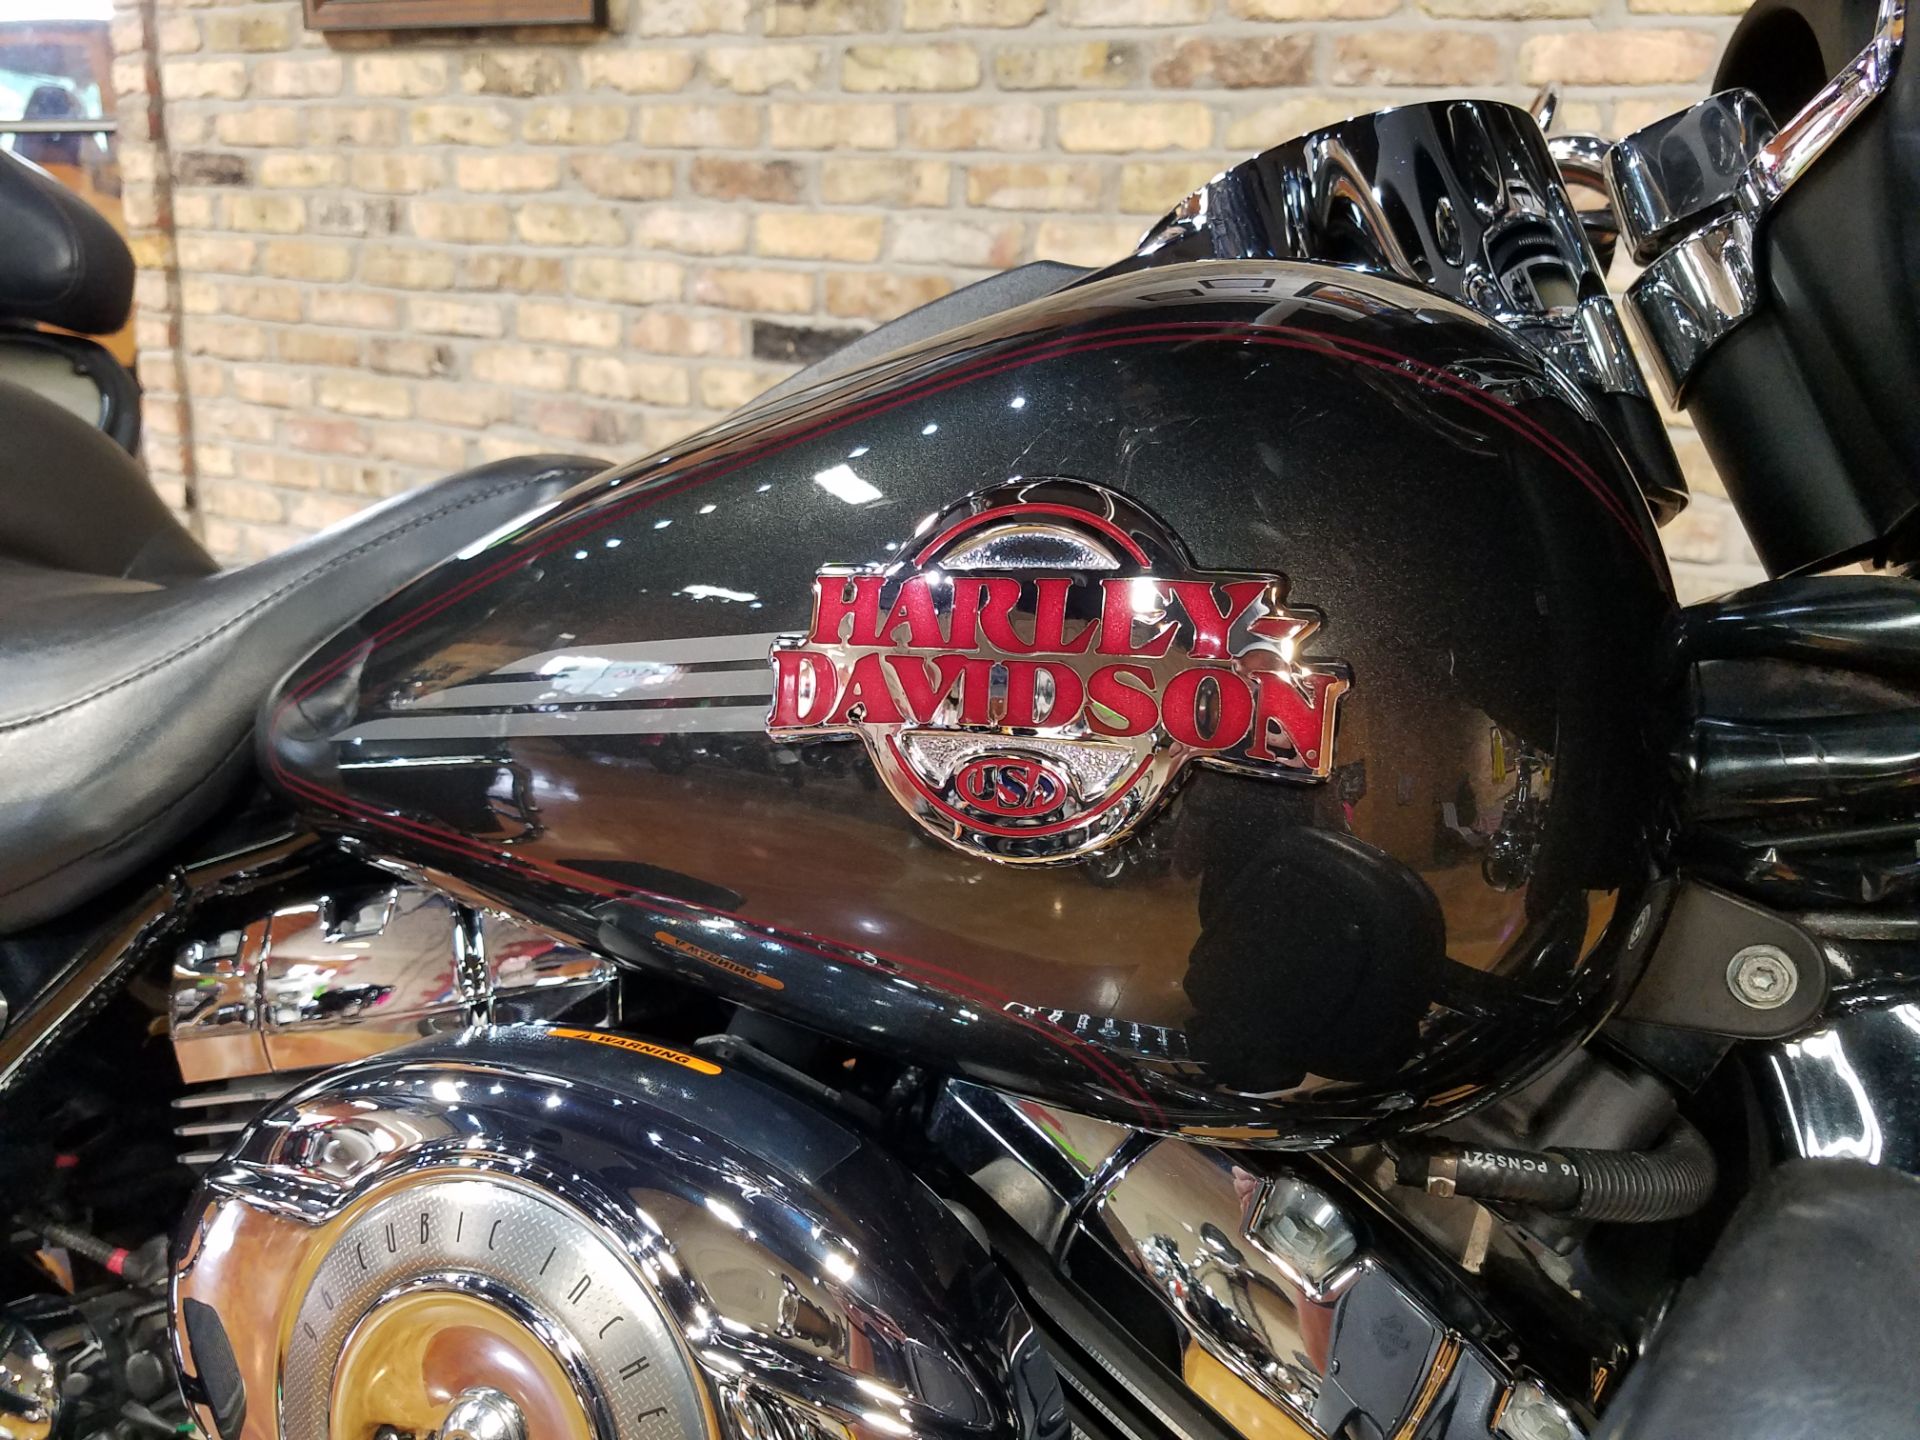 2007 Harley-Davidson Ultra Classic® Electra Glide® in Big Bend, Wisconsin - Photo 17